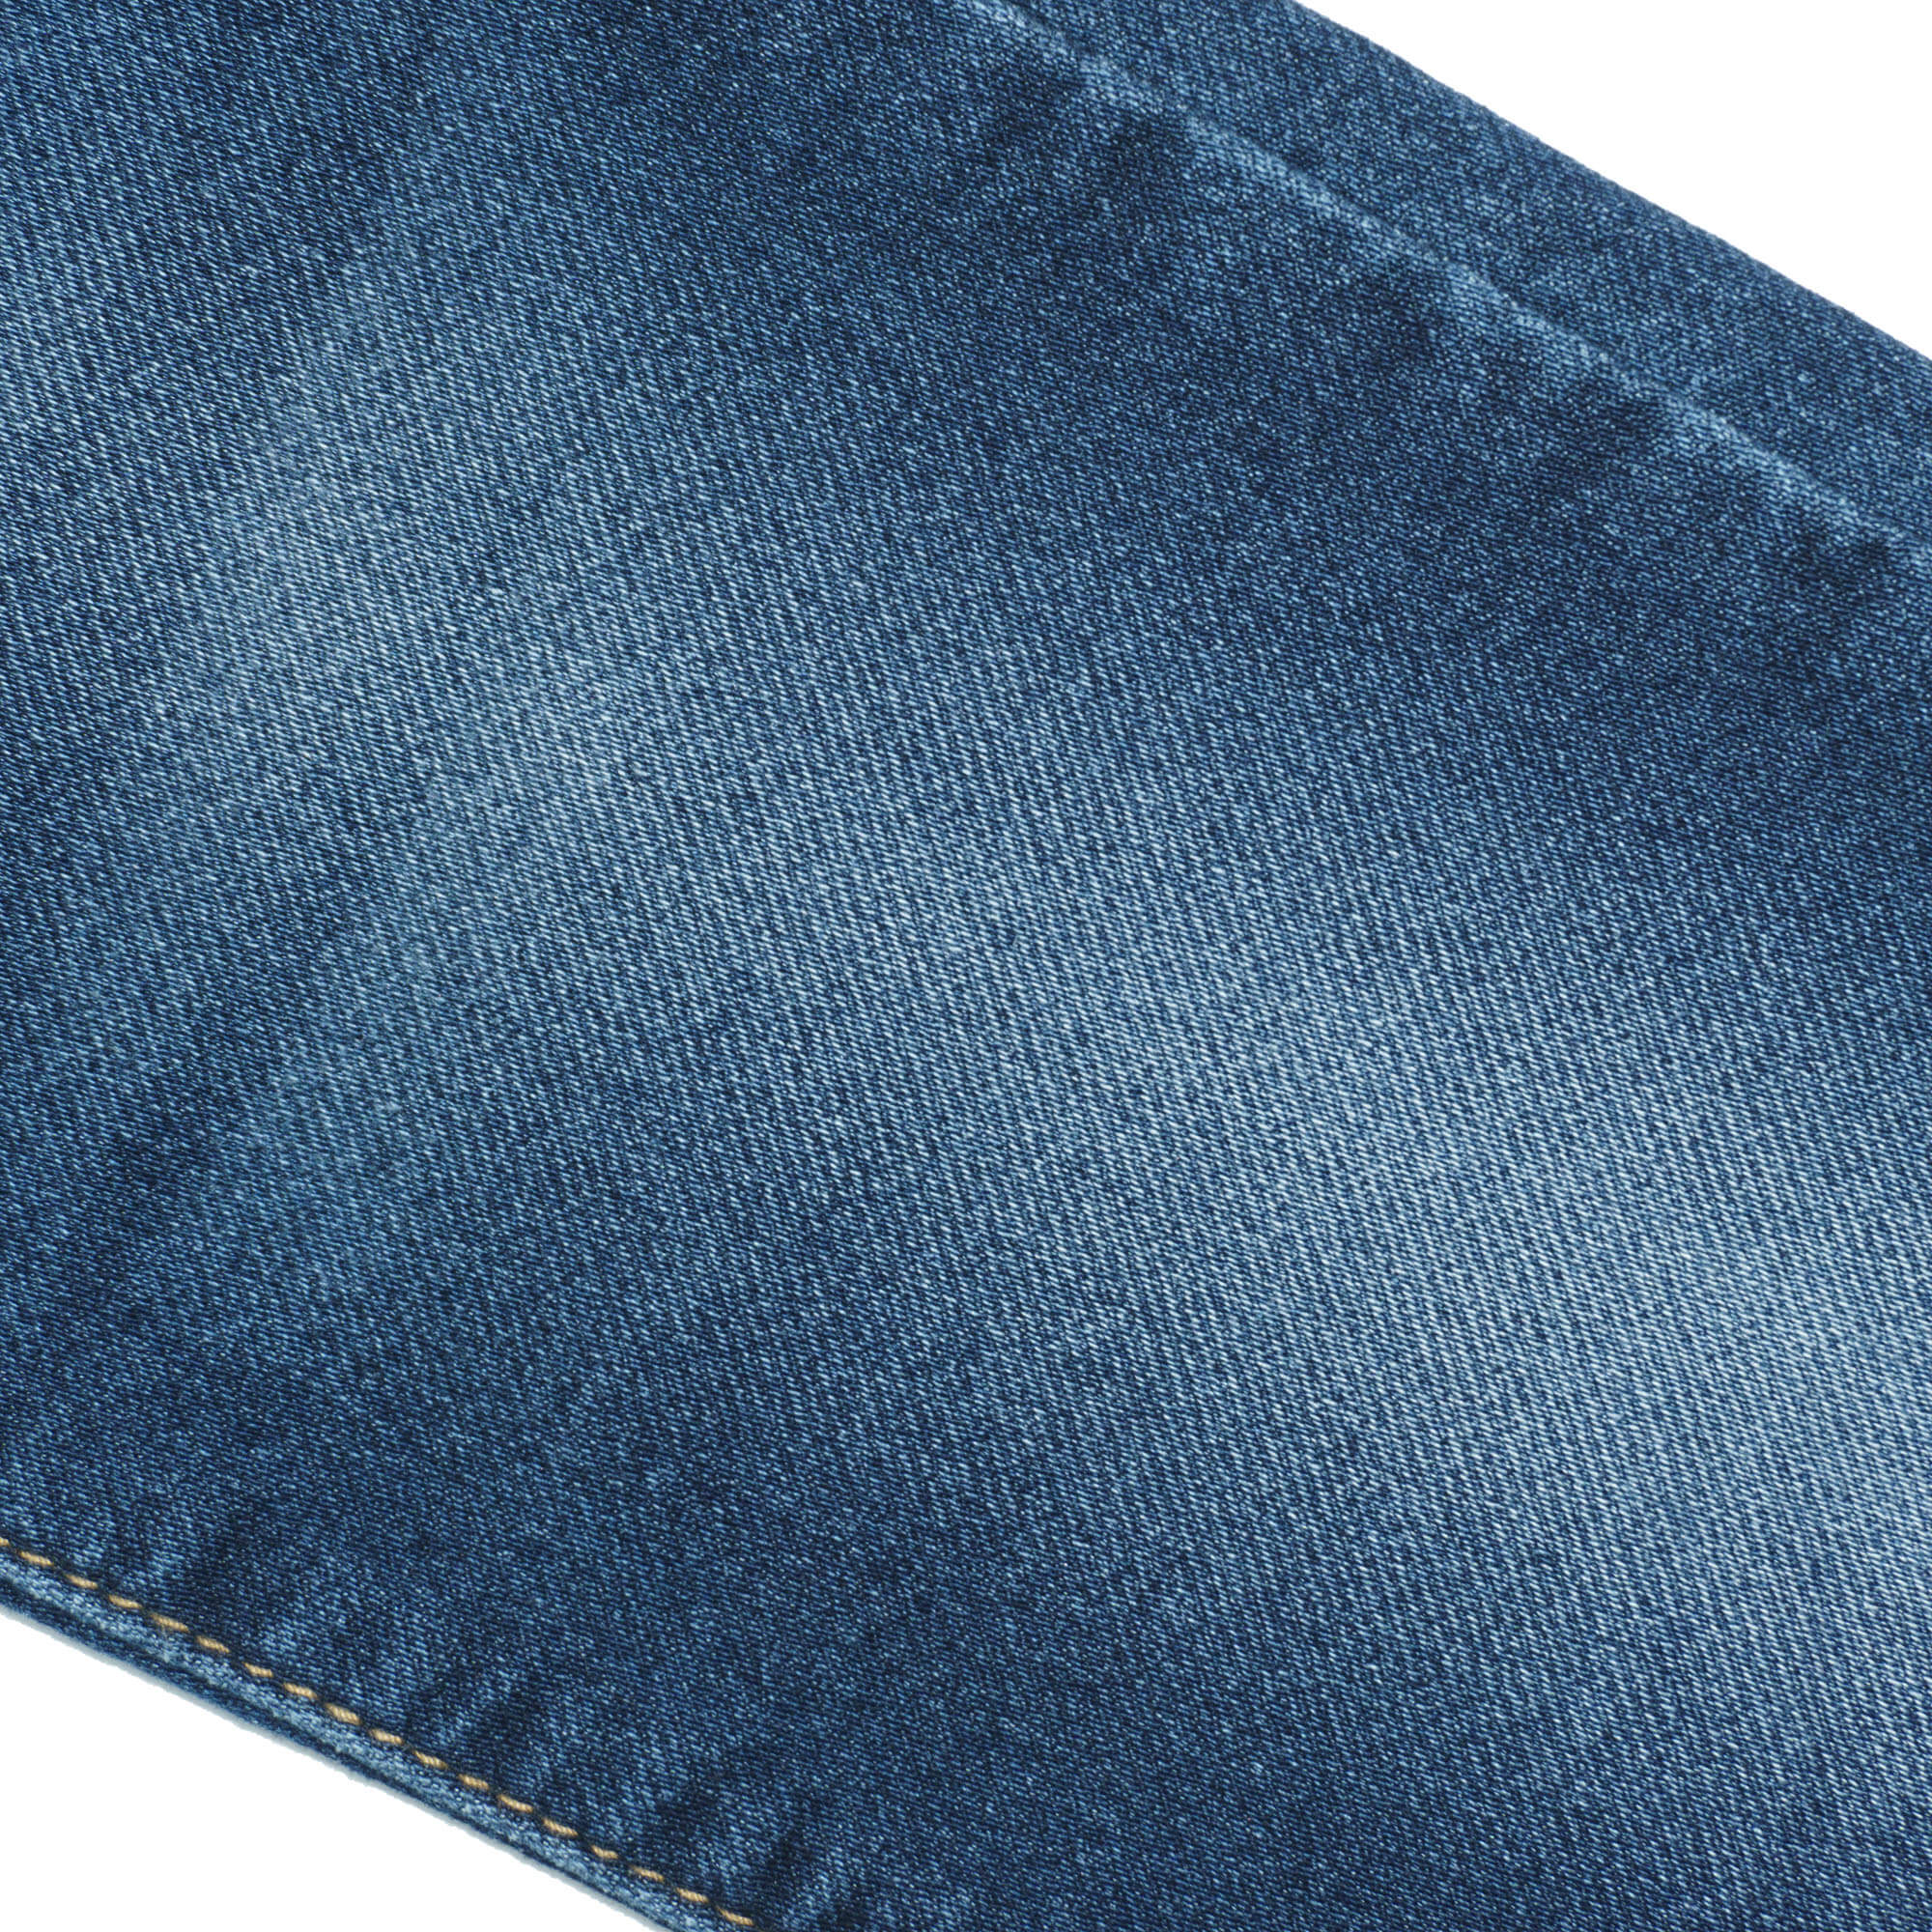 Blue Jean Texture C12726 Black by Riley Blake Designs - Printed Denim- –  Cute Little Fabric Shop